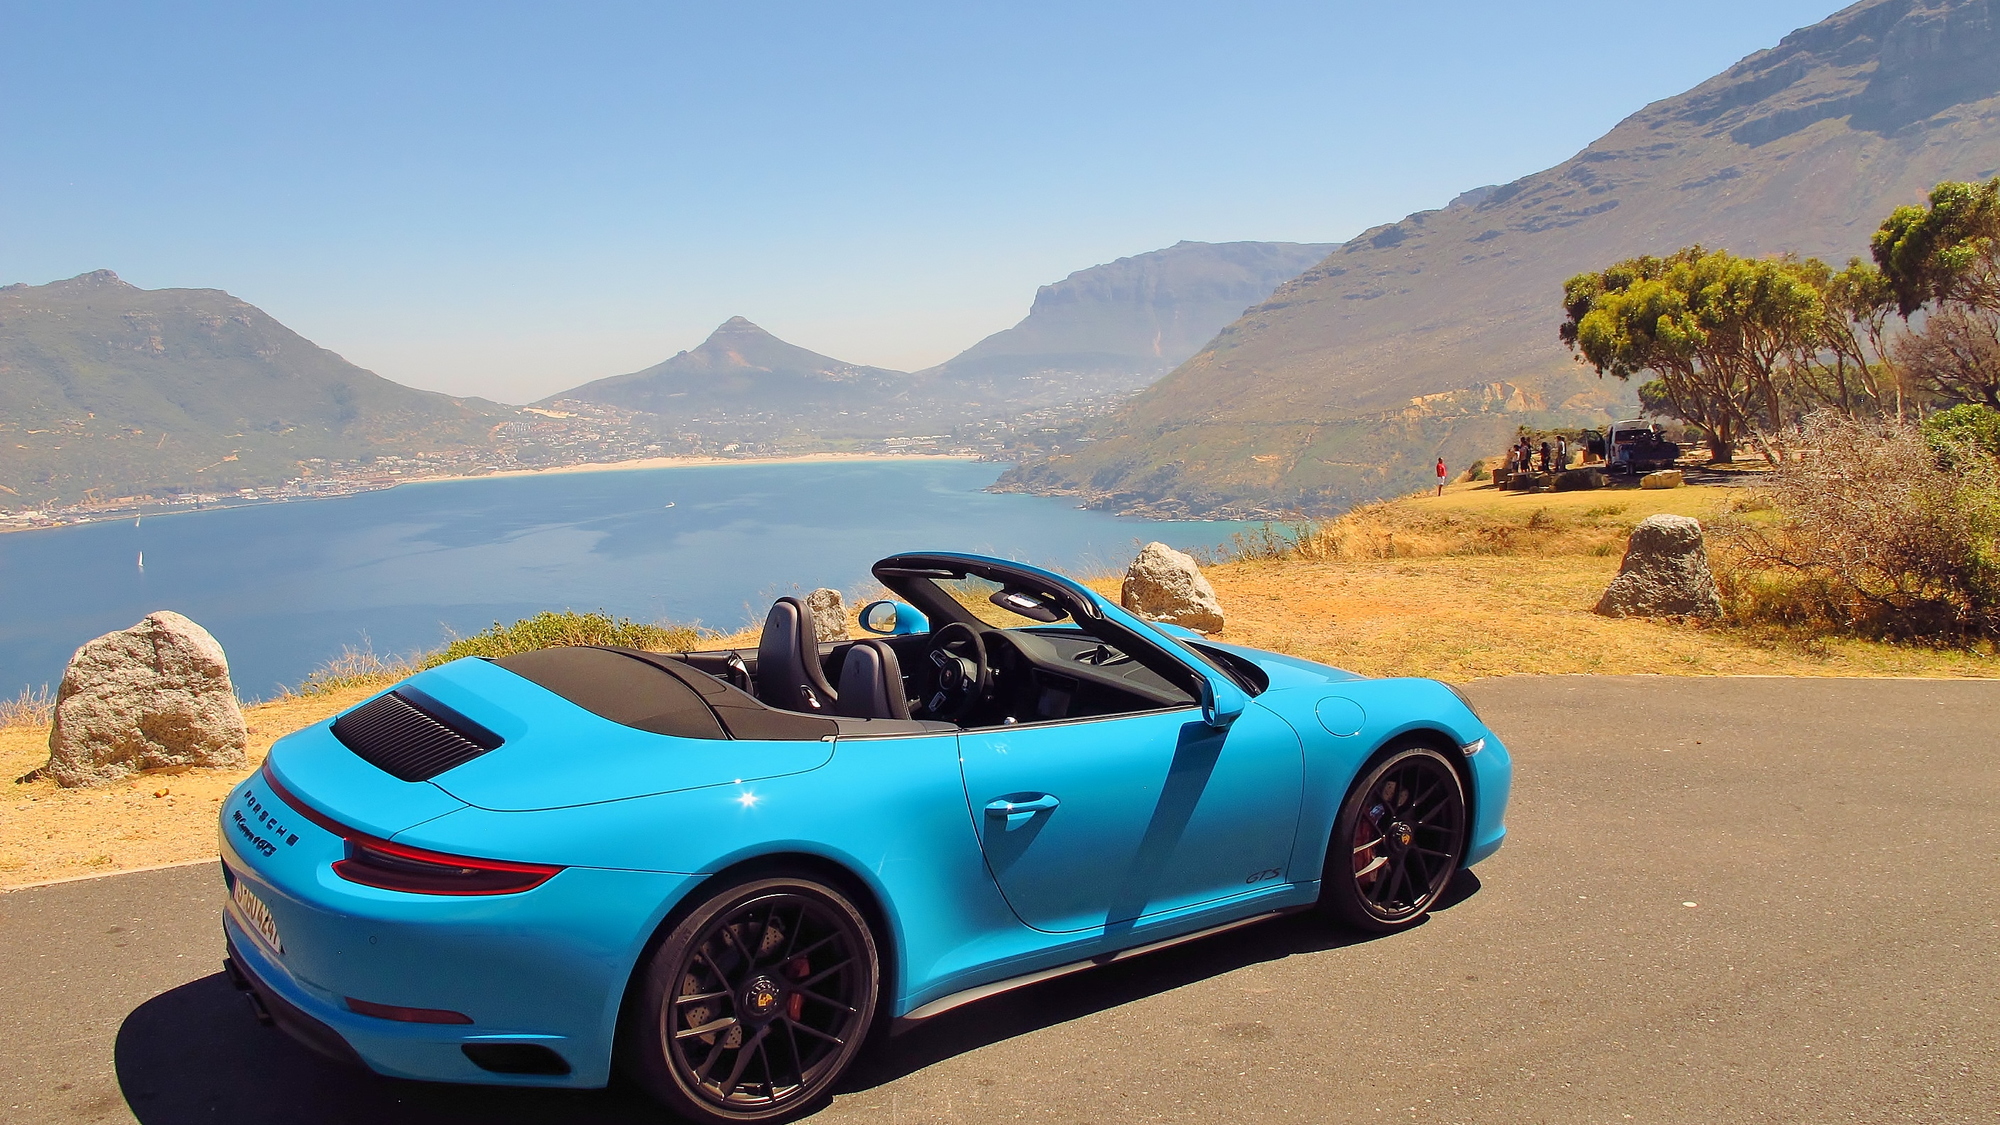 2017 Porsche 911 Carrera GTS Media Drive, Cape Town, South Africa, January 2017